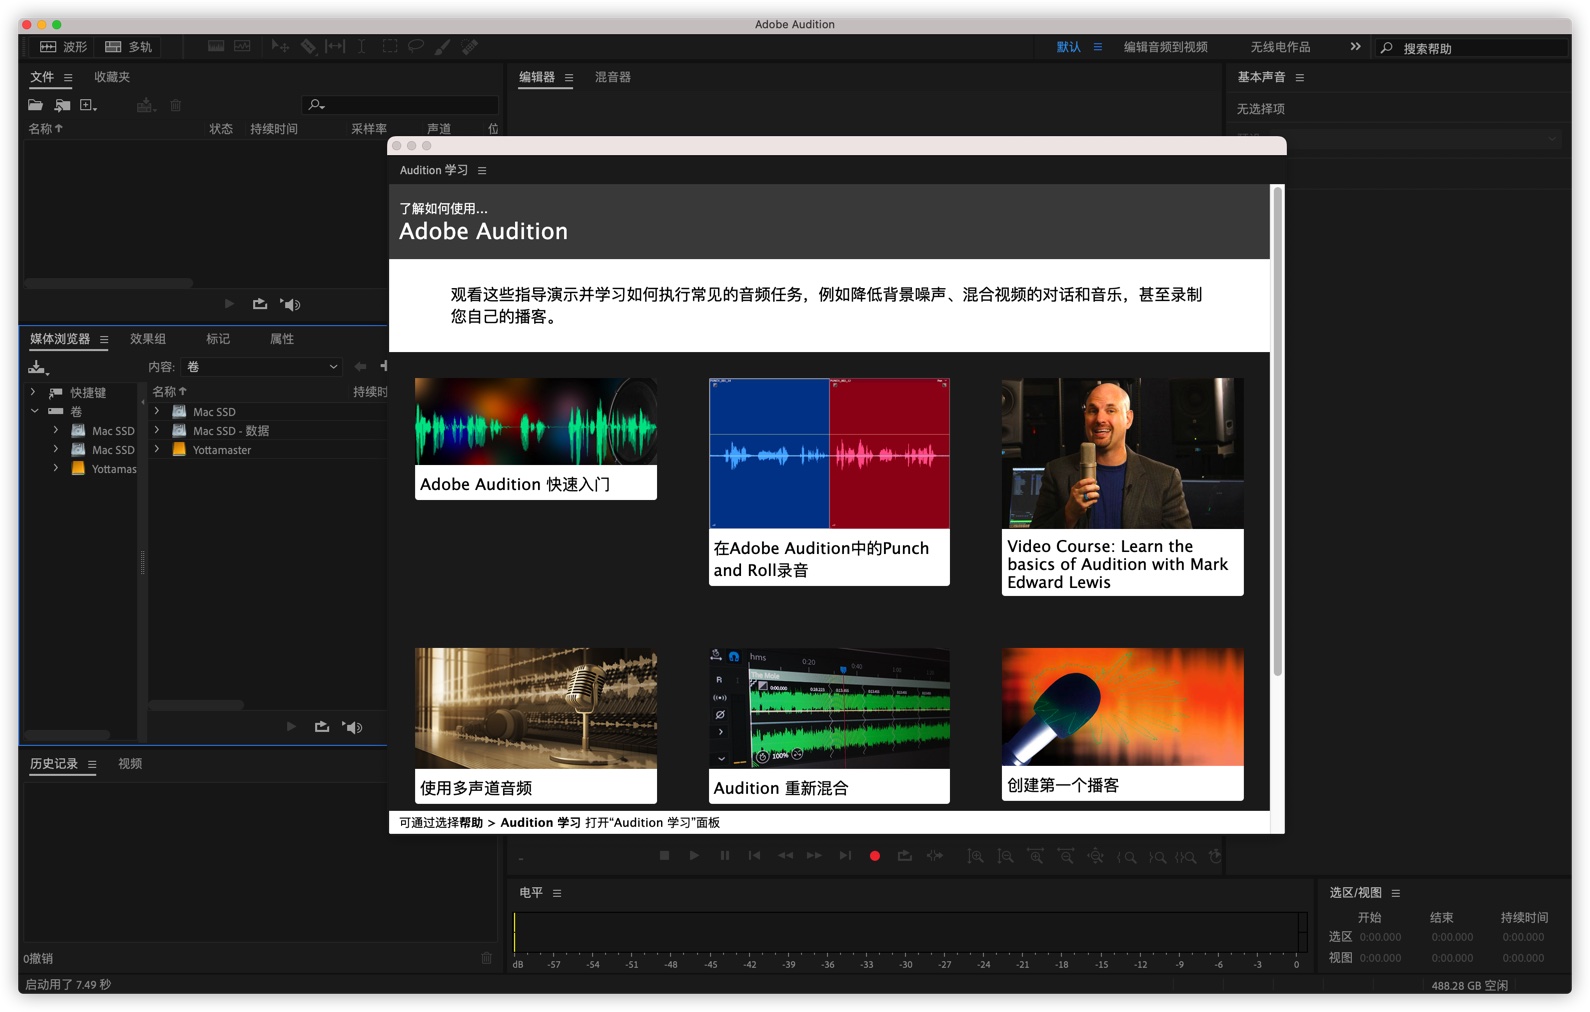 Adobe Audition 2021 14.4 for Mac|Mac版下载 | AU 音频编辑软件